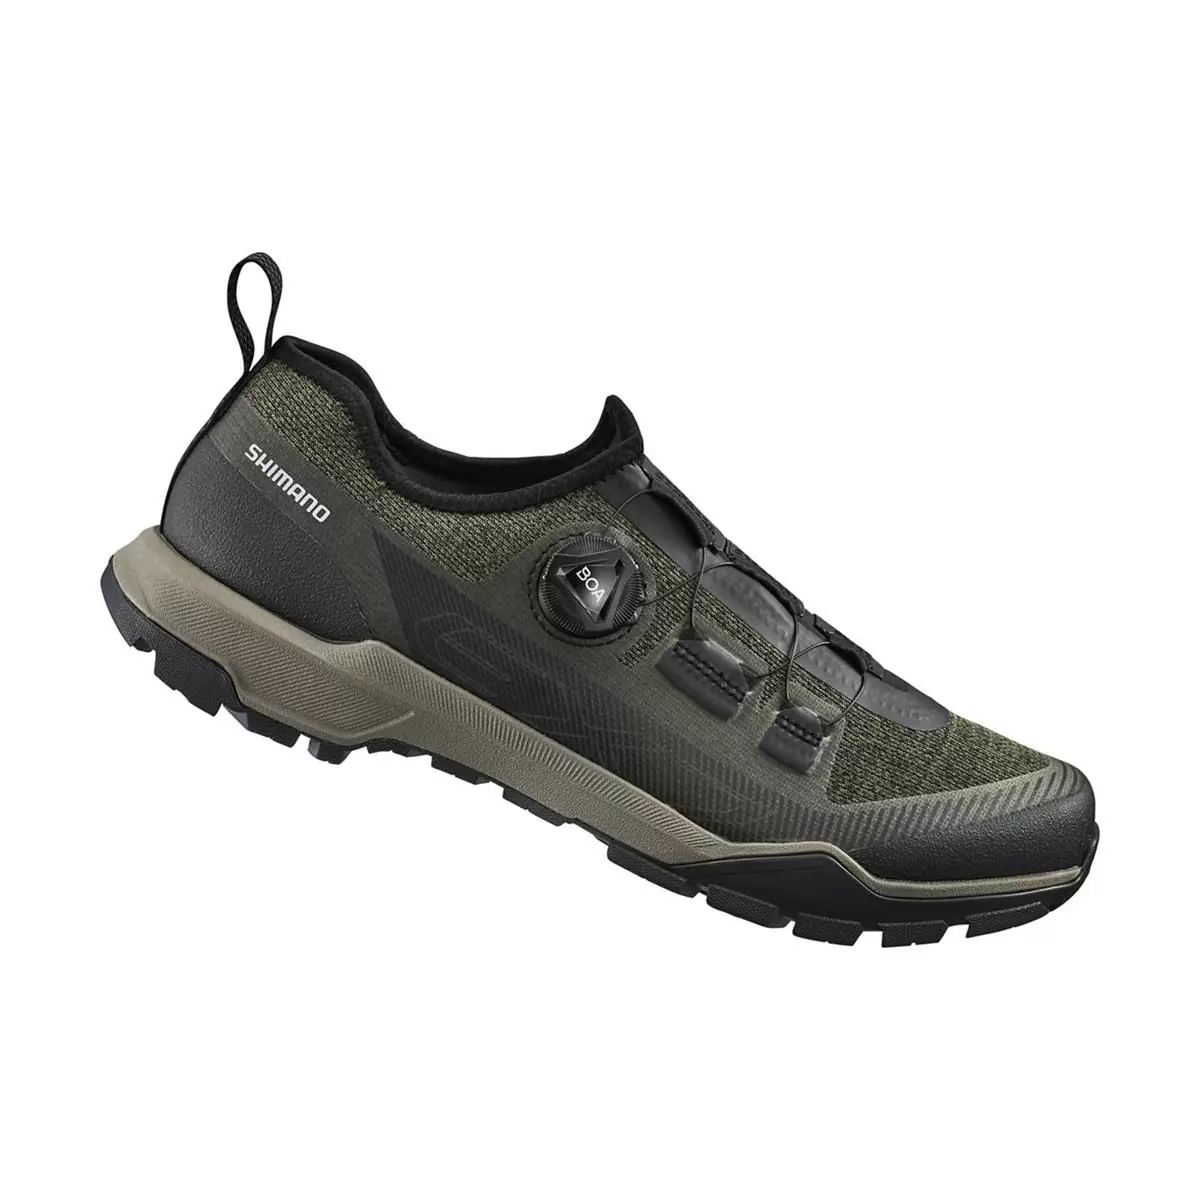 Trekking / MTB Shoes SH-EX700 Green Size 39 - image